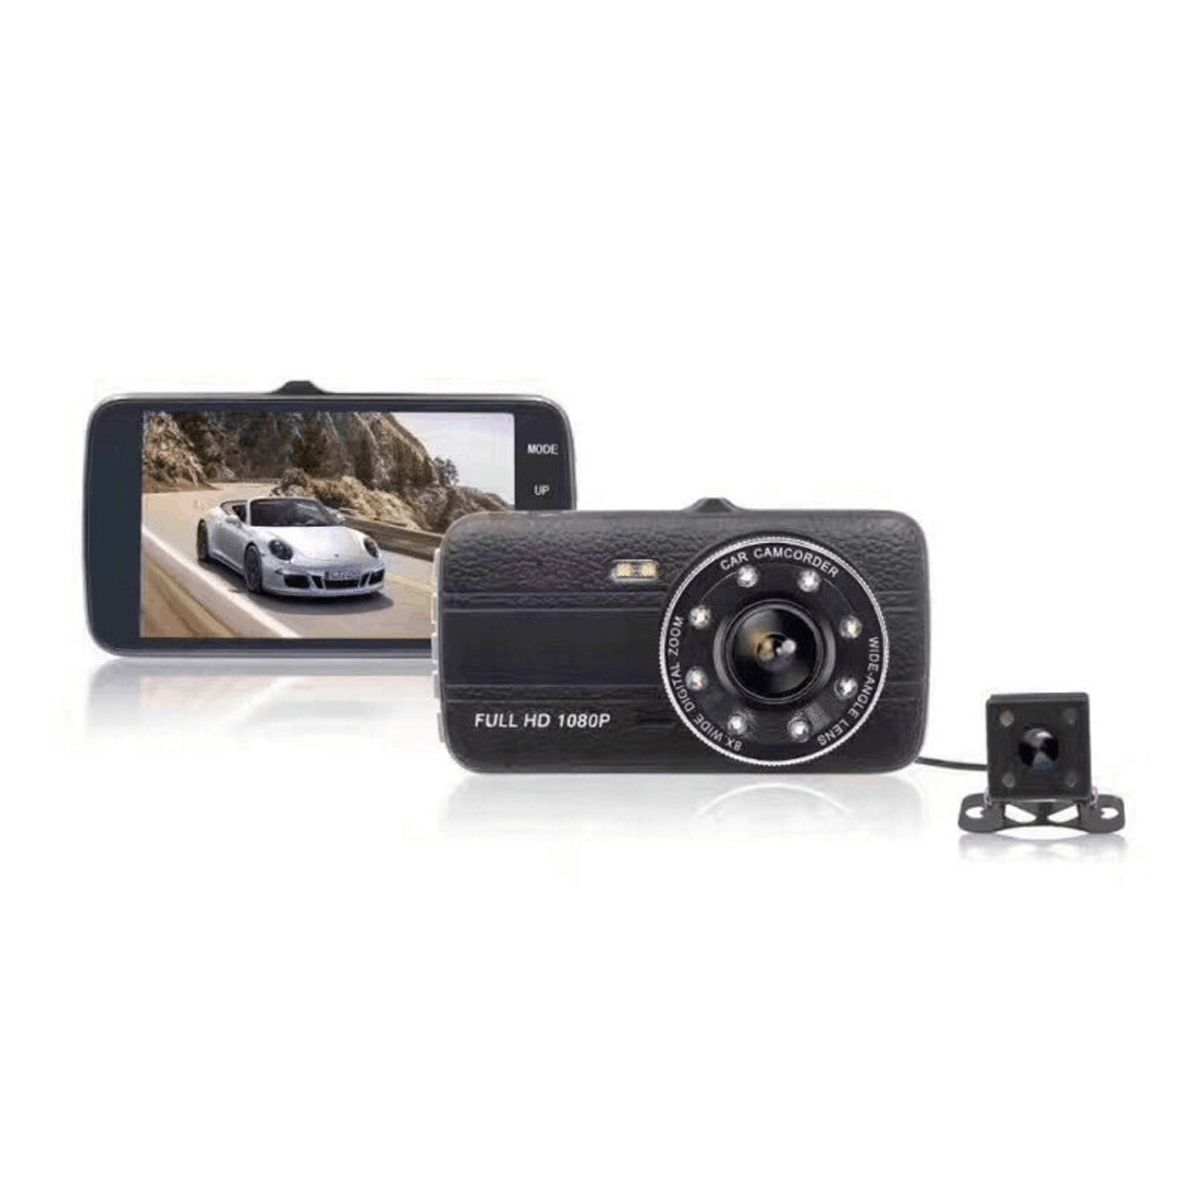 4-Inch-Car-DVR-With-Rear-View-Camera-Night-Version-1080p-Parking-Monitoring-G-senor-170deg-Wide-angl-1622941